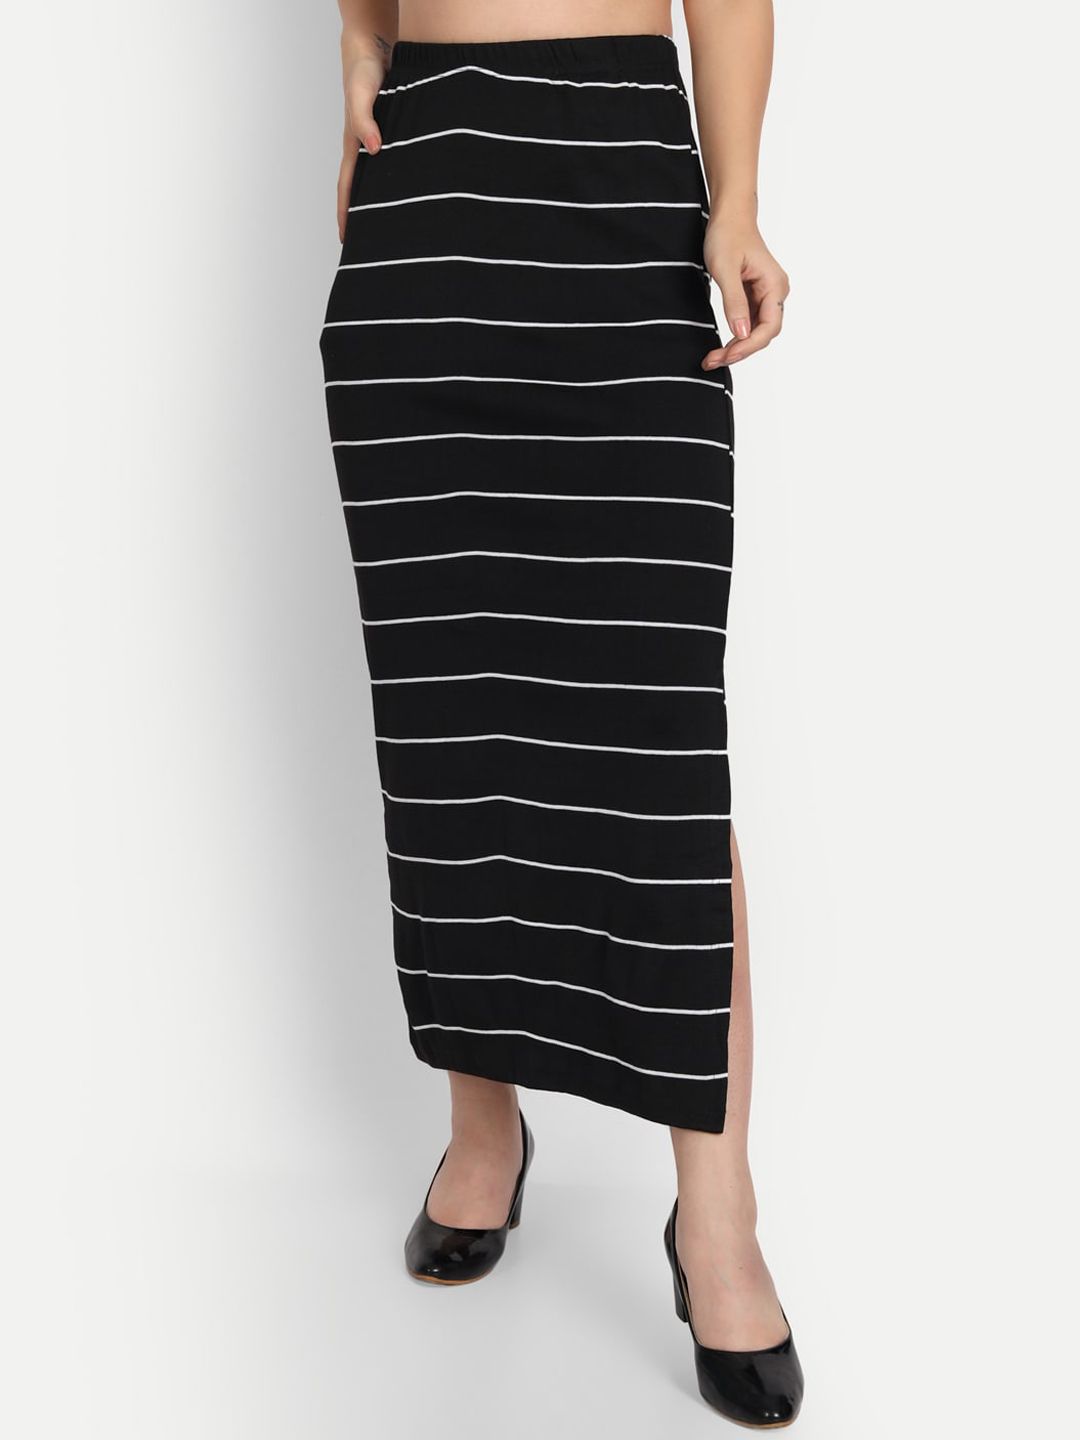 FRAUTICA Women Black & White Striped Cotton Skirts Price in India